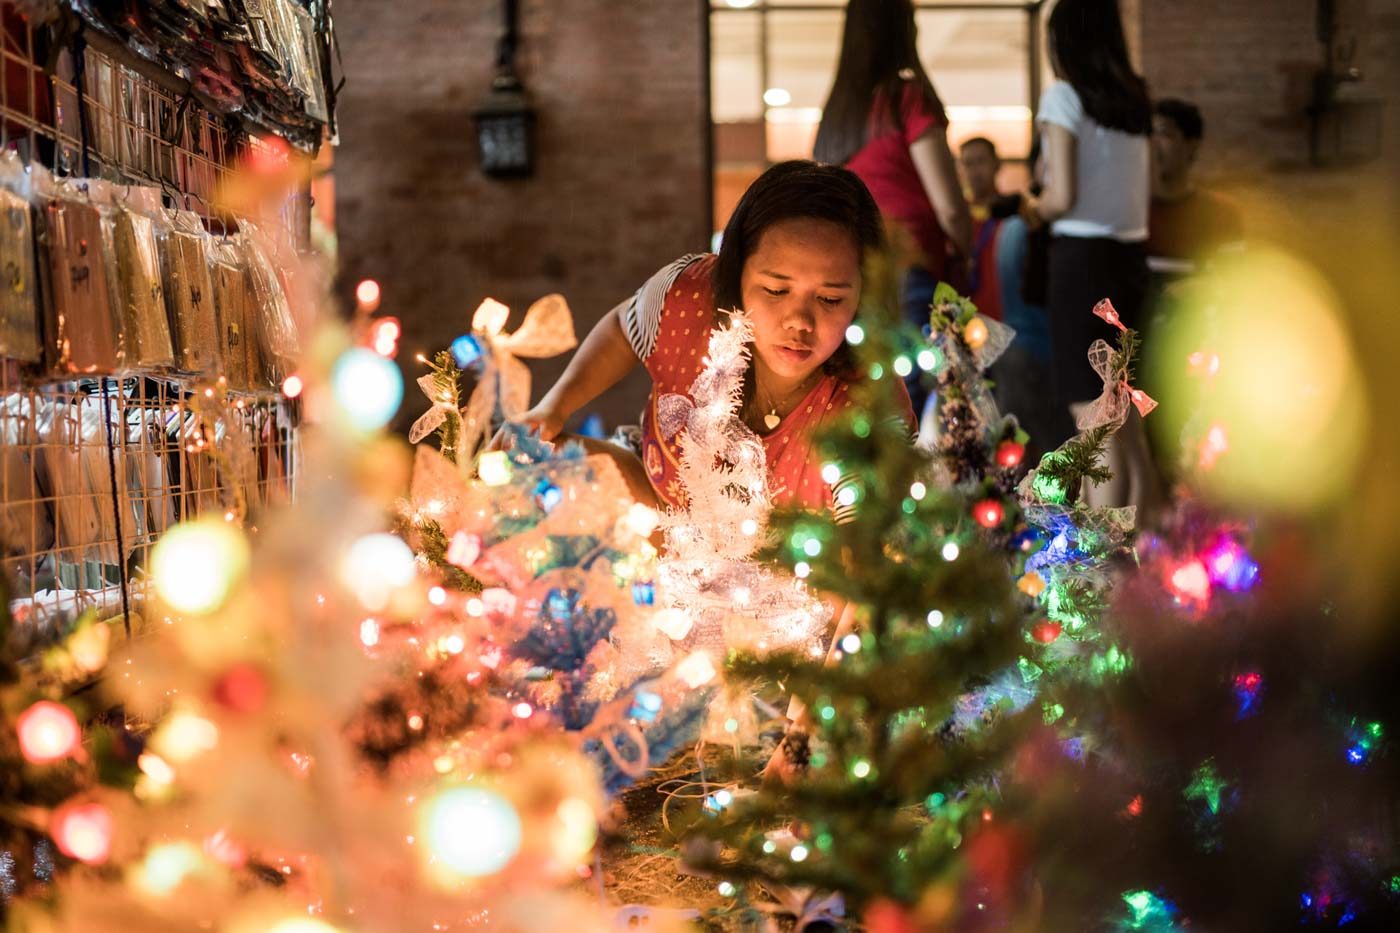 IN PHOTOS: Divisoria and Dapitan Arcade, Metro Manila’s joyful Christmas corners